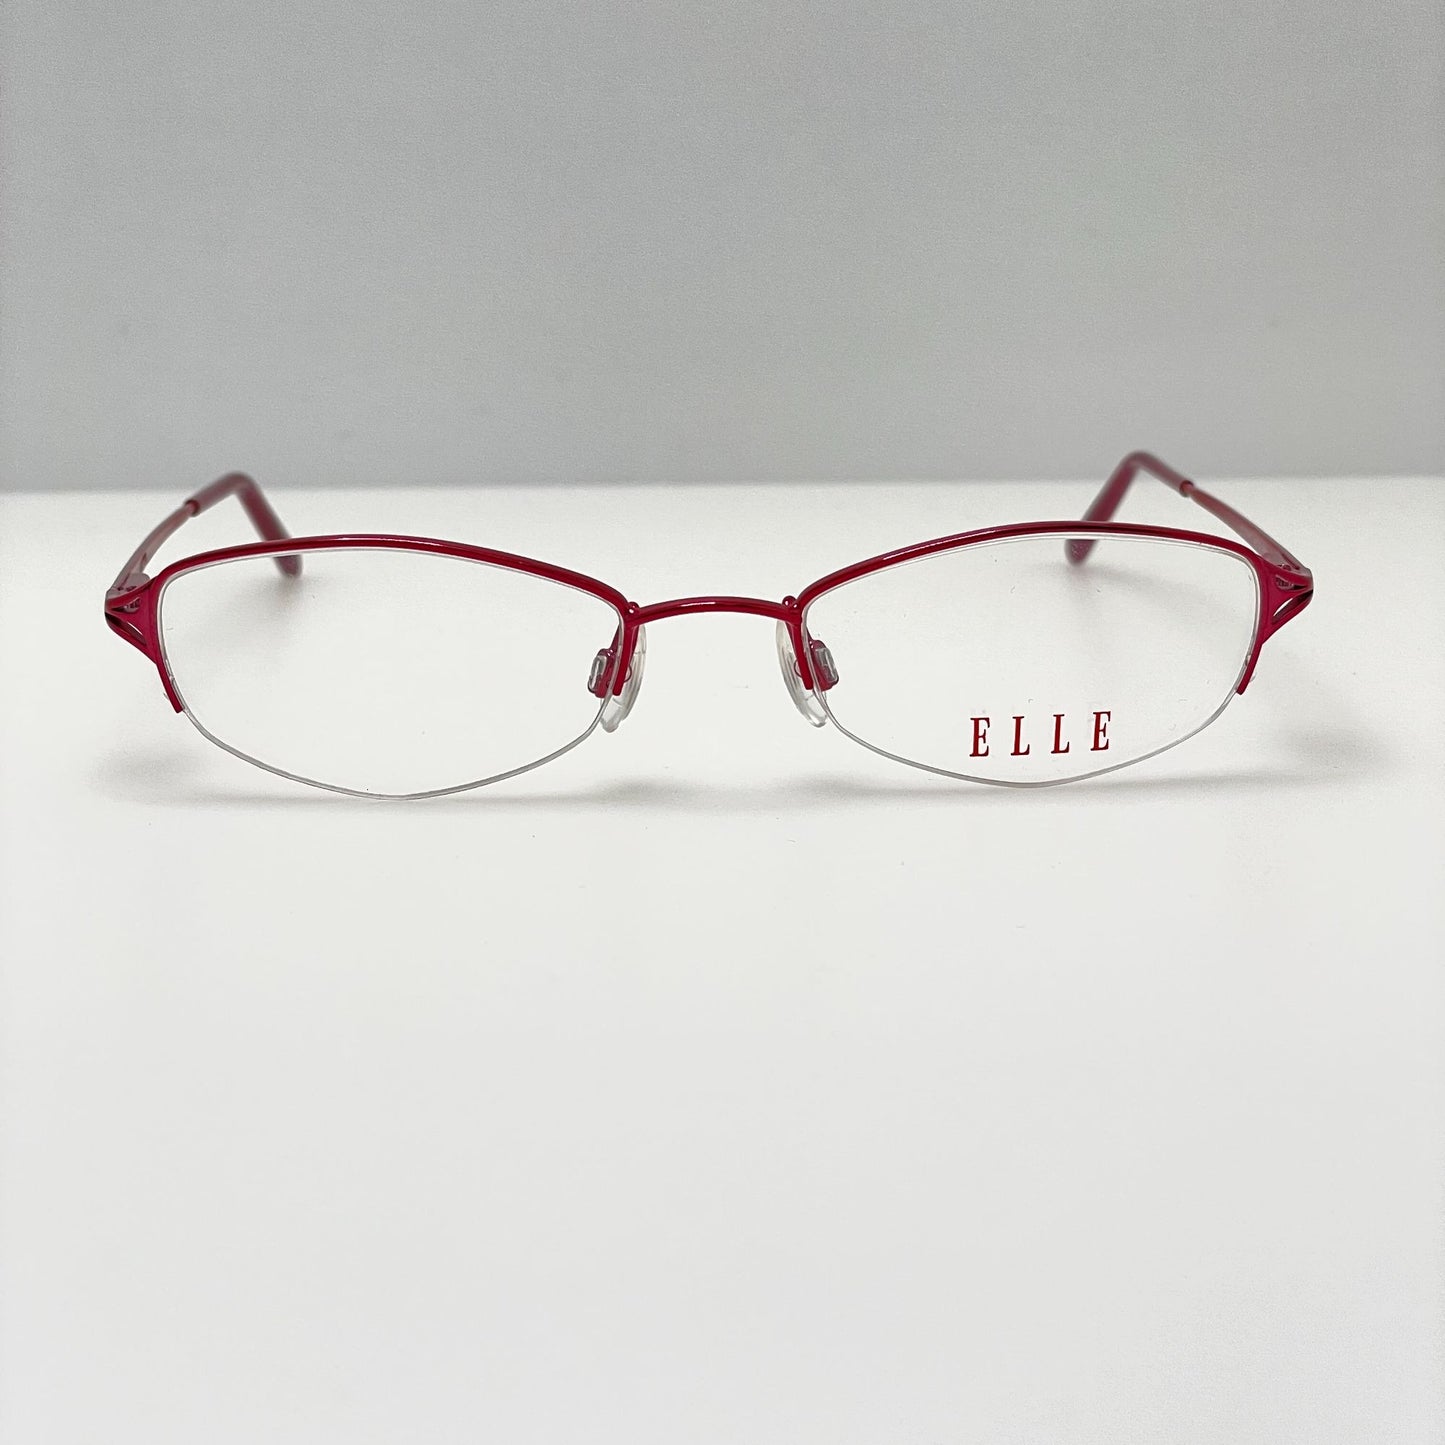 Elle Eyeglasses Eye Glasses Frames EL18595 PK 48-18-140